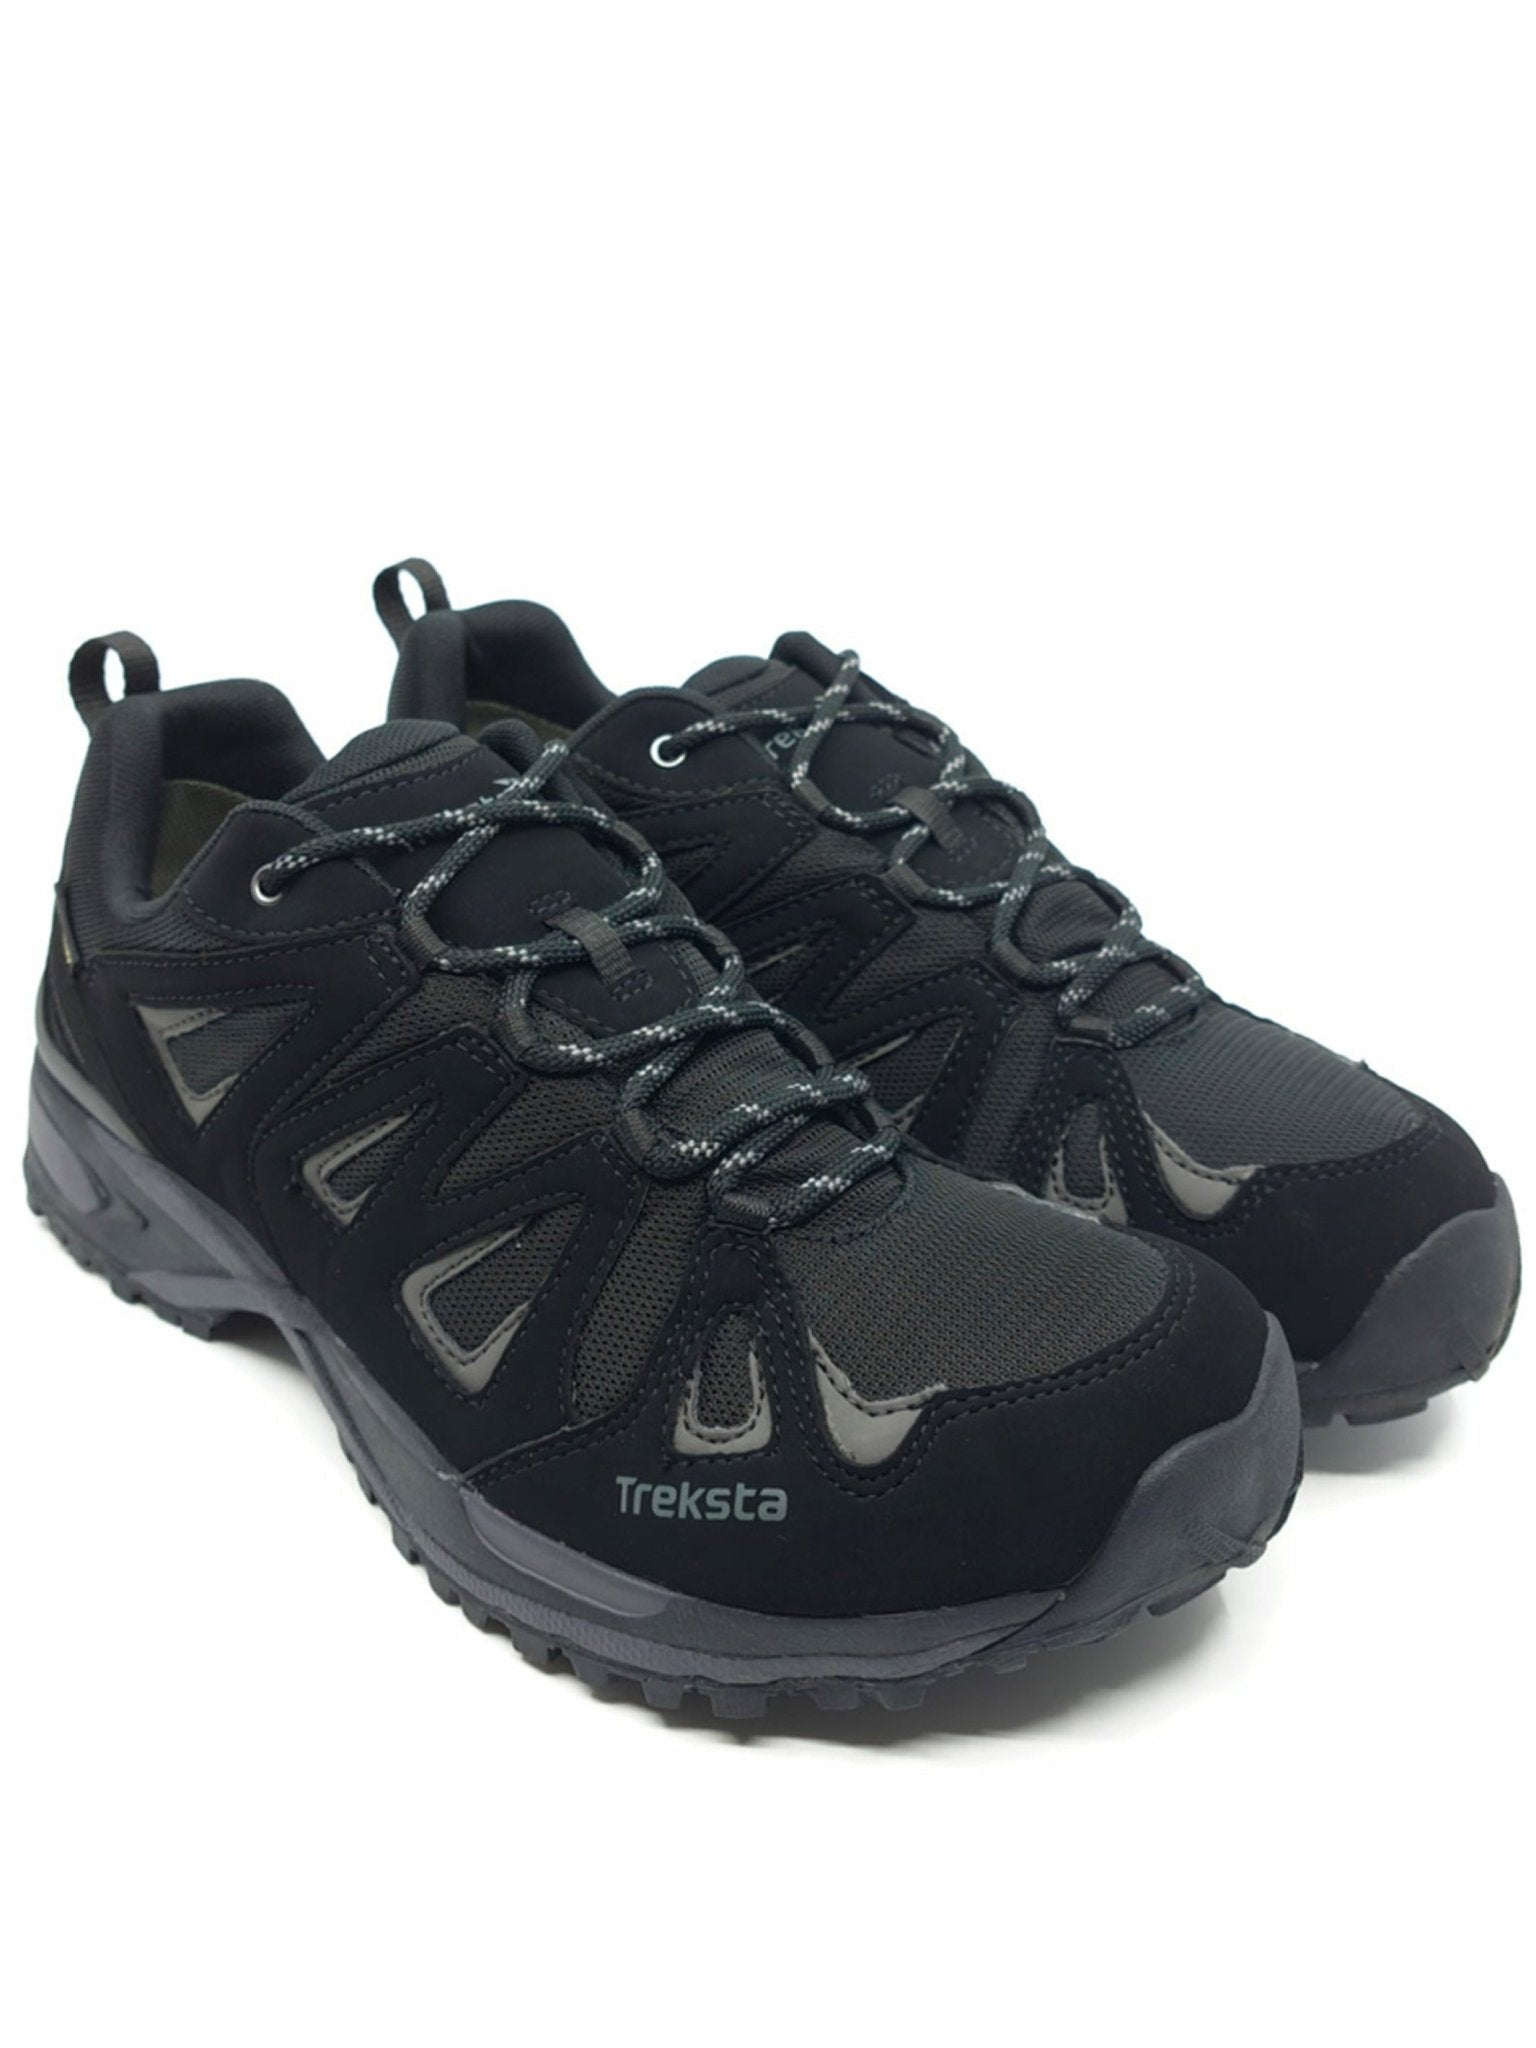 4elementsclothingTrekstaTreksta - Buxton Lace Low GTX - Gore-Tex Waterproof Low Lace Trail / walking shoe / trainerShoes750122562350